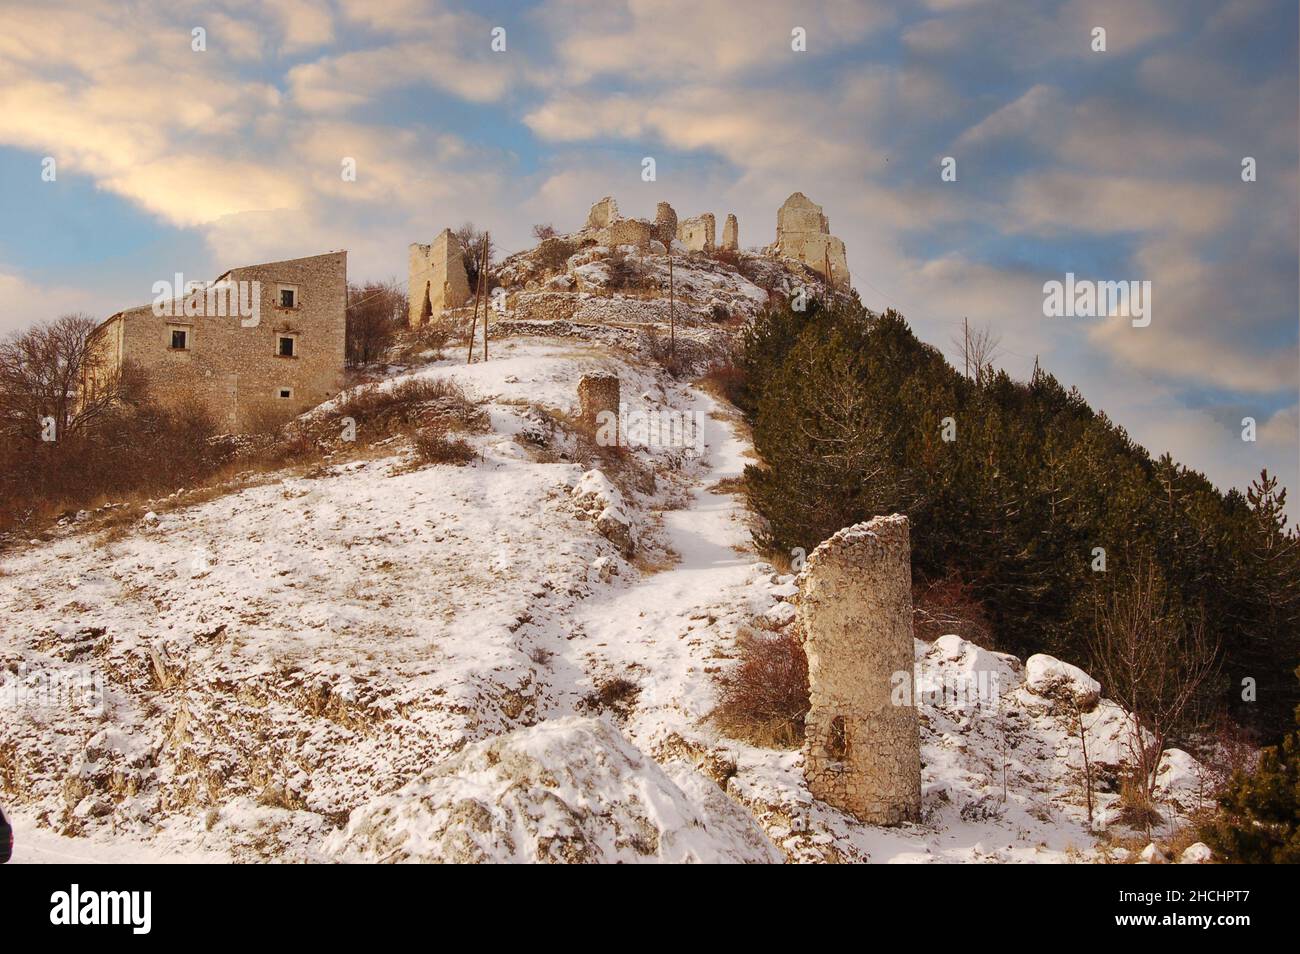 Le chemin vers Rocca Calascio ruina le château, Abruzzo, Italie Banque D'Images